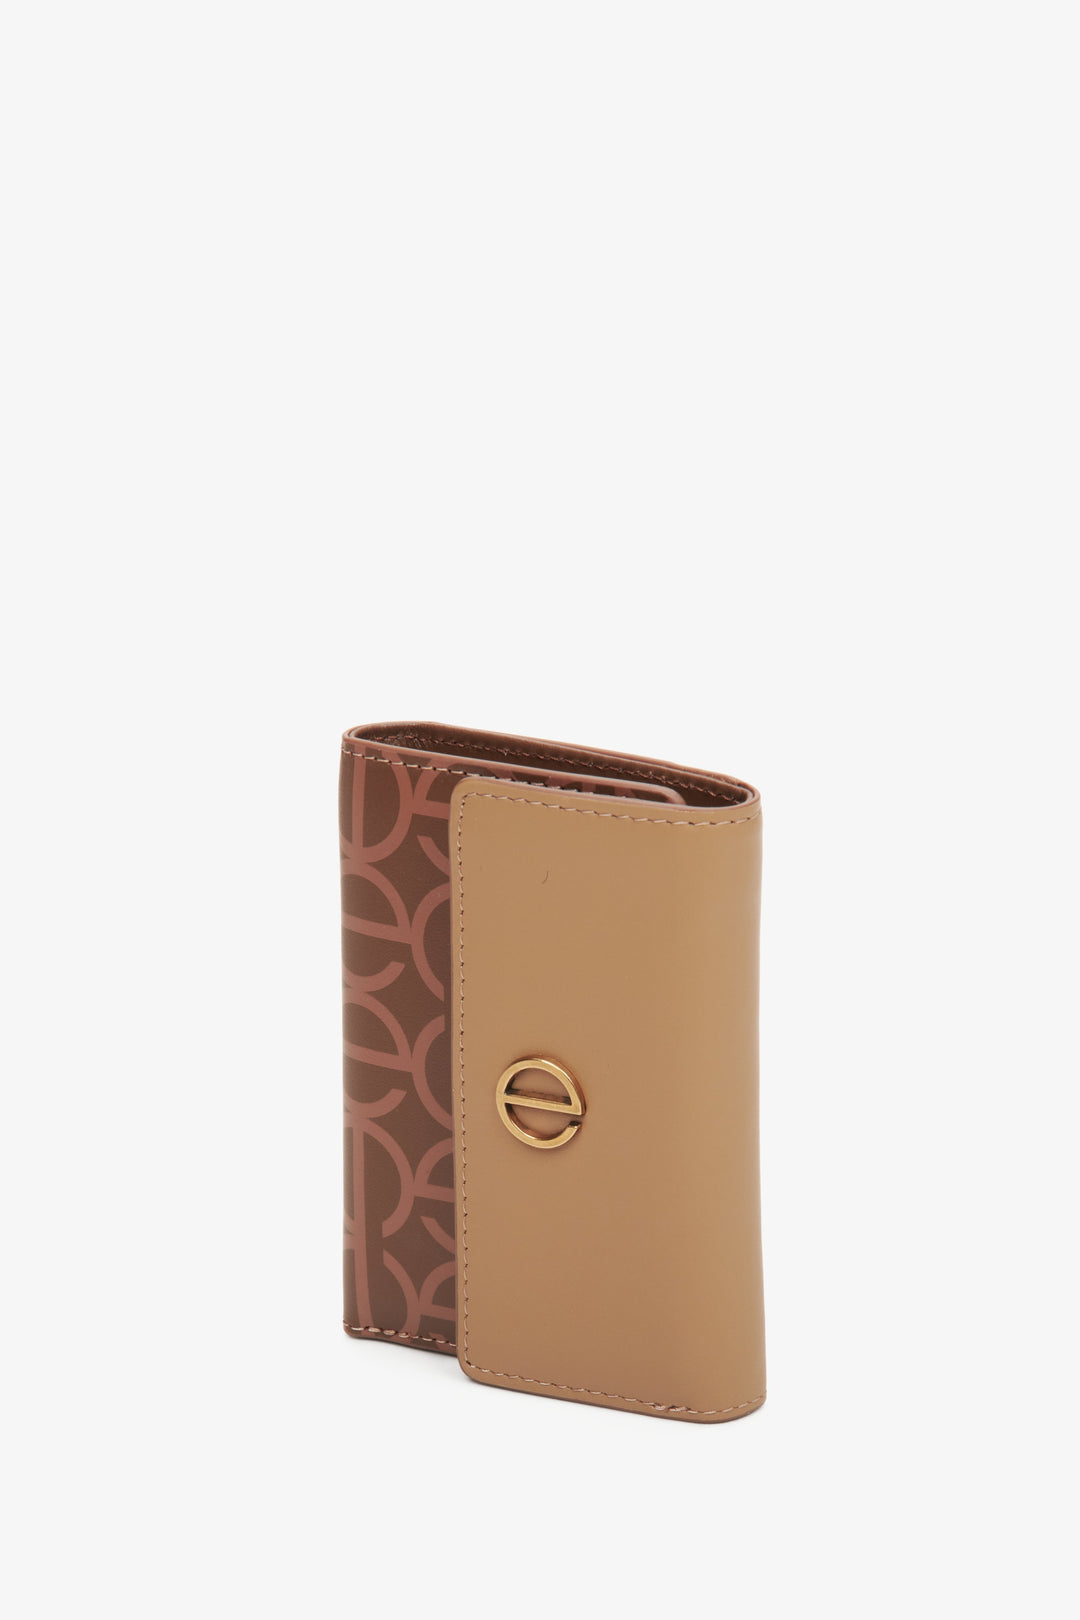 Medium-sized women's brown leather wallet by Estro.